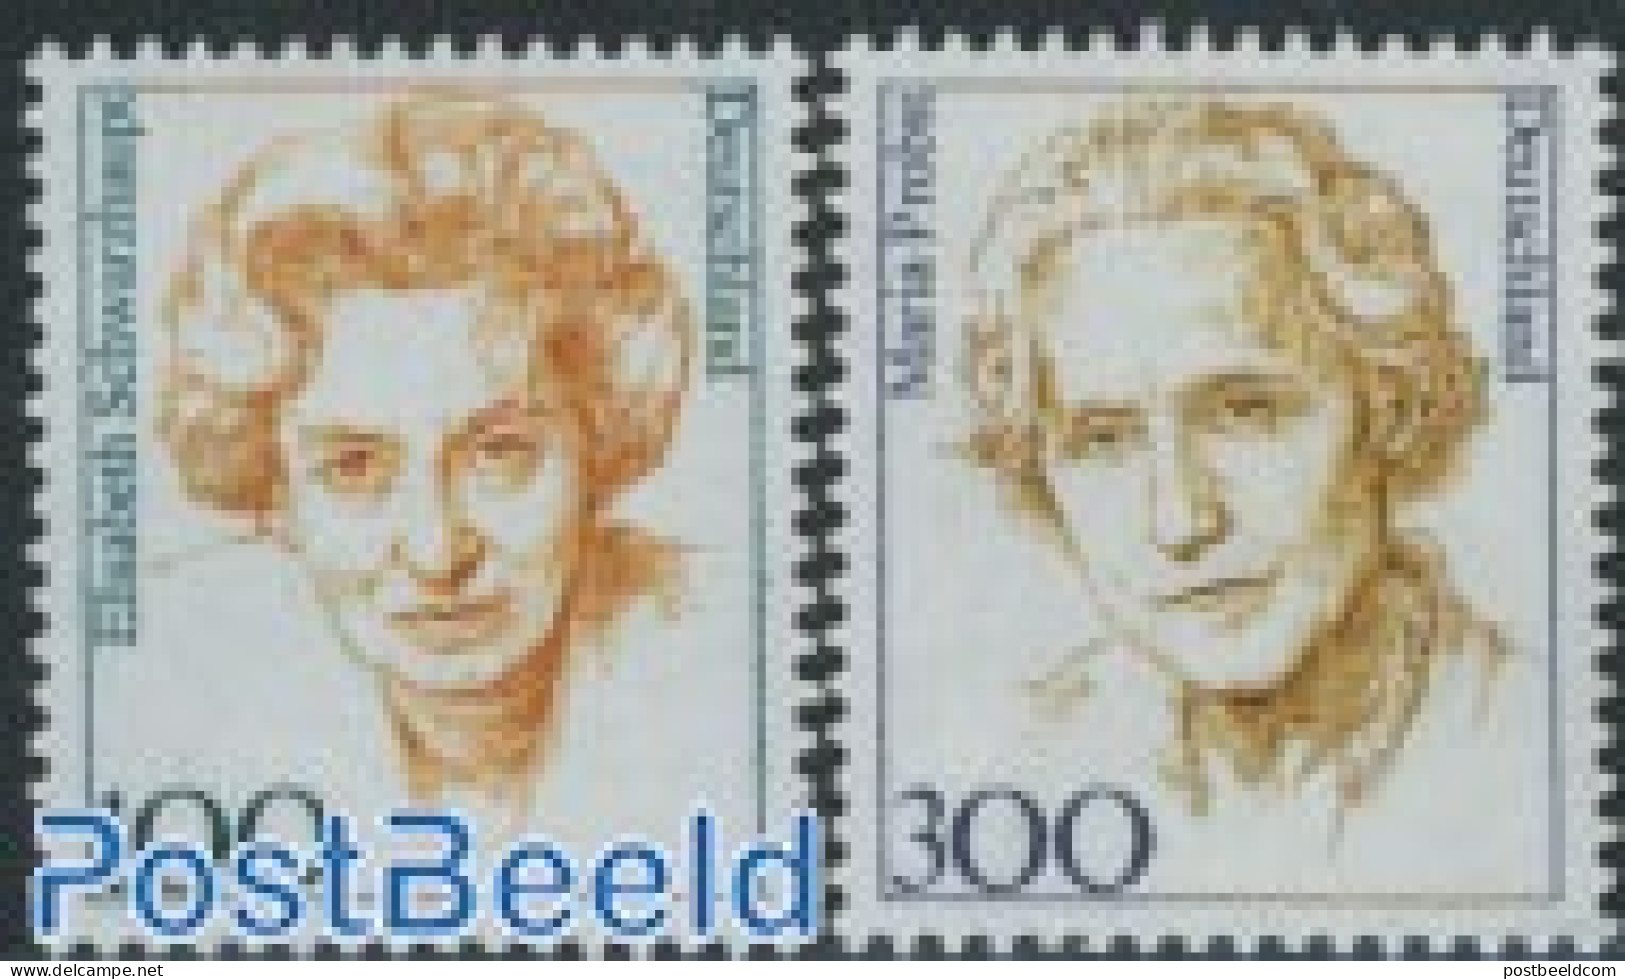 Germany, Federal Republic 1997 Definitives, Women 2v, Mint NH, History - Politicians - Women - Ongebruikt